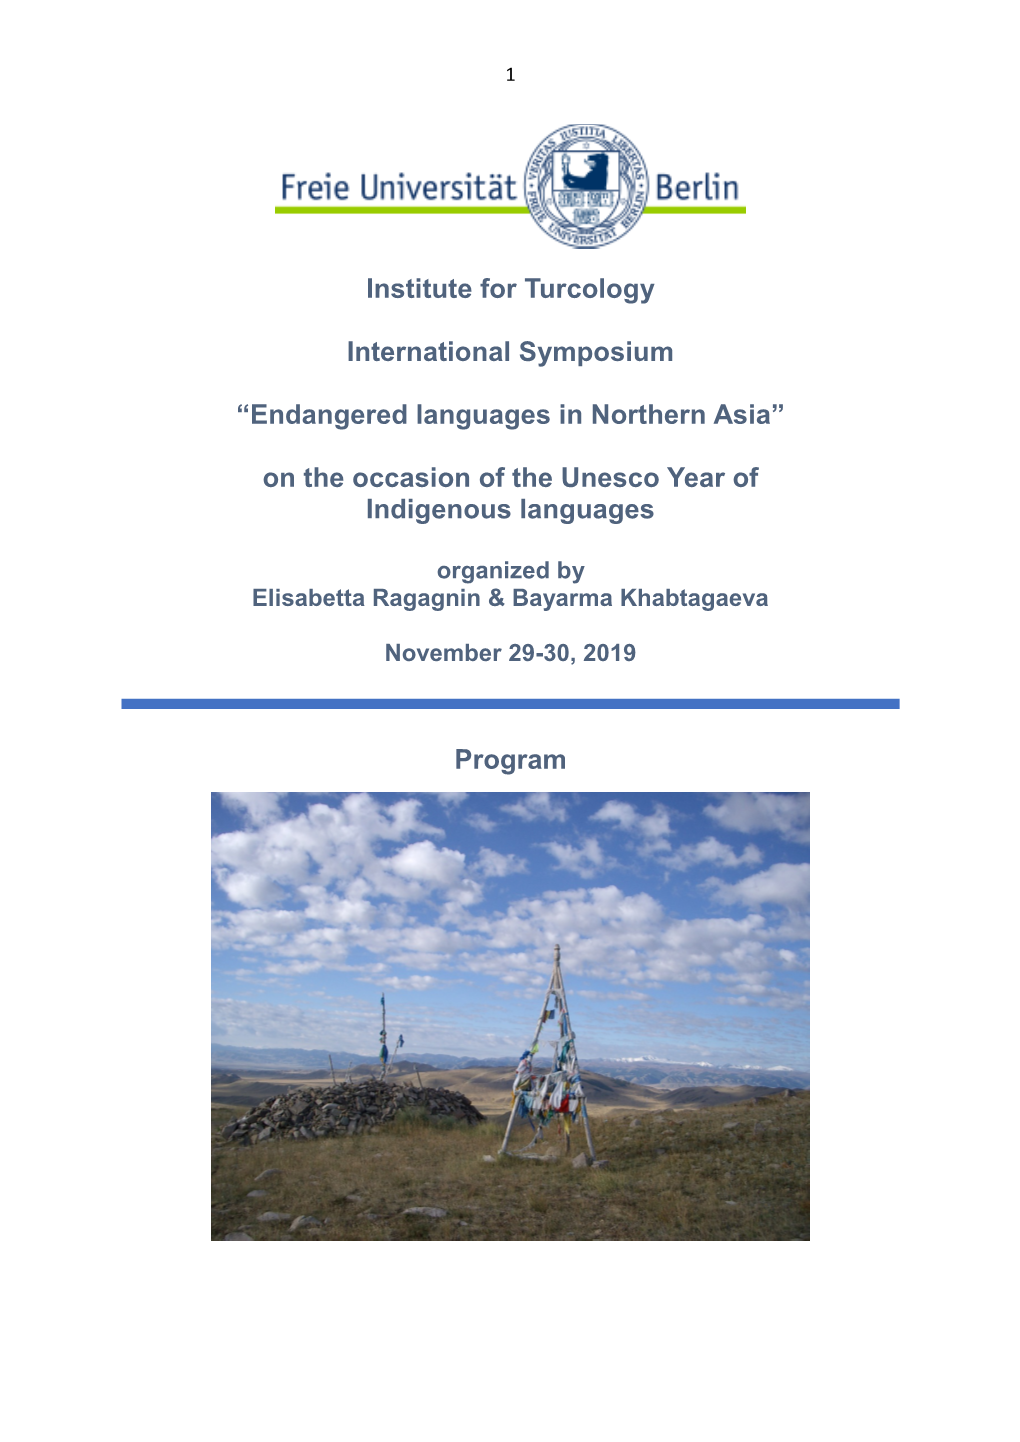 Institute for Turcology International Symposium “Endangered